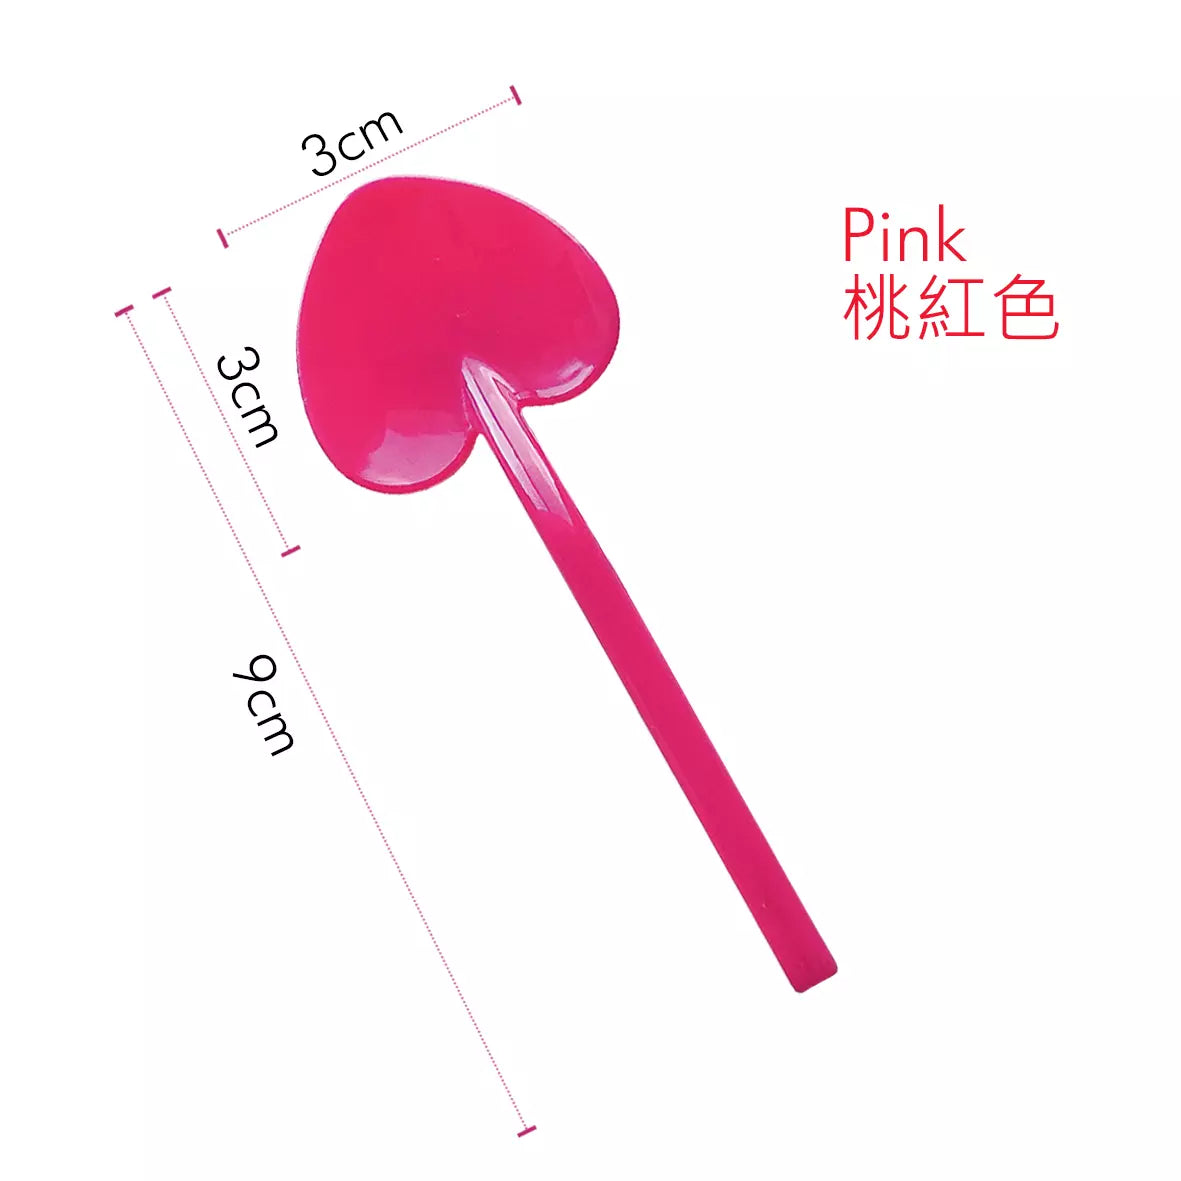 9cm PS Heart-Shaped Spoon